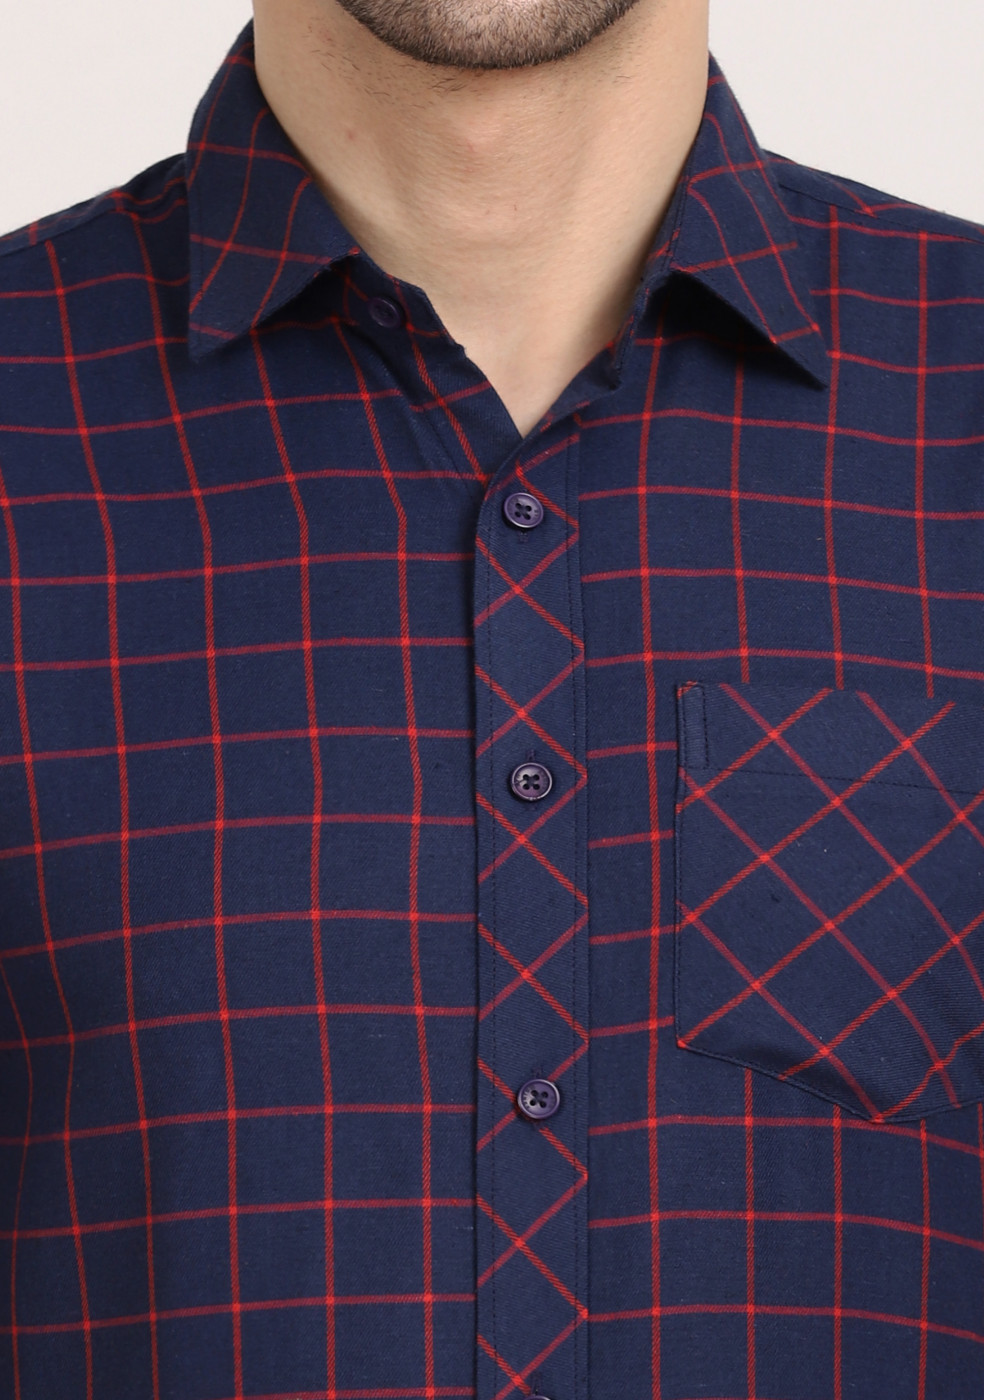 ASHTOM  Navy Red Mix Check Regular Fit Cotton Shirt For Men